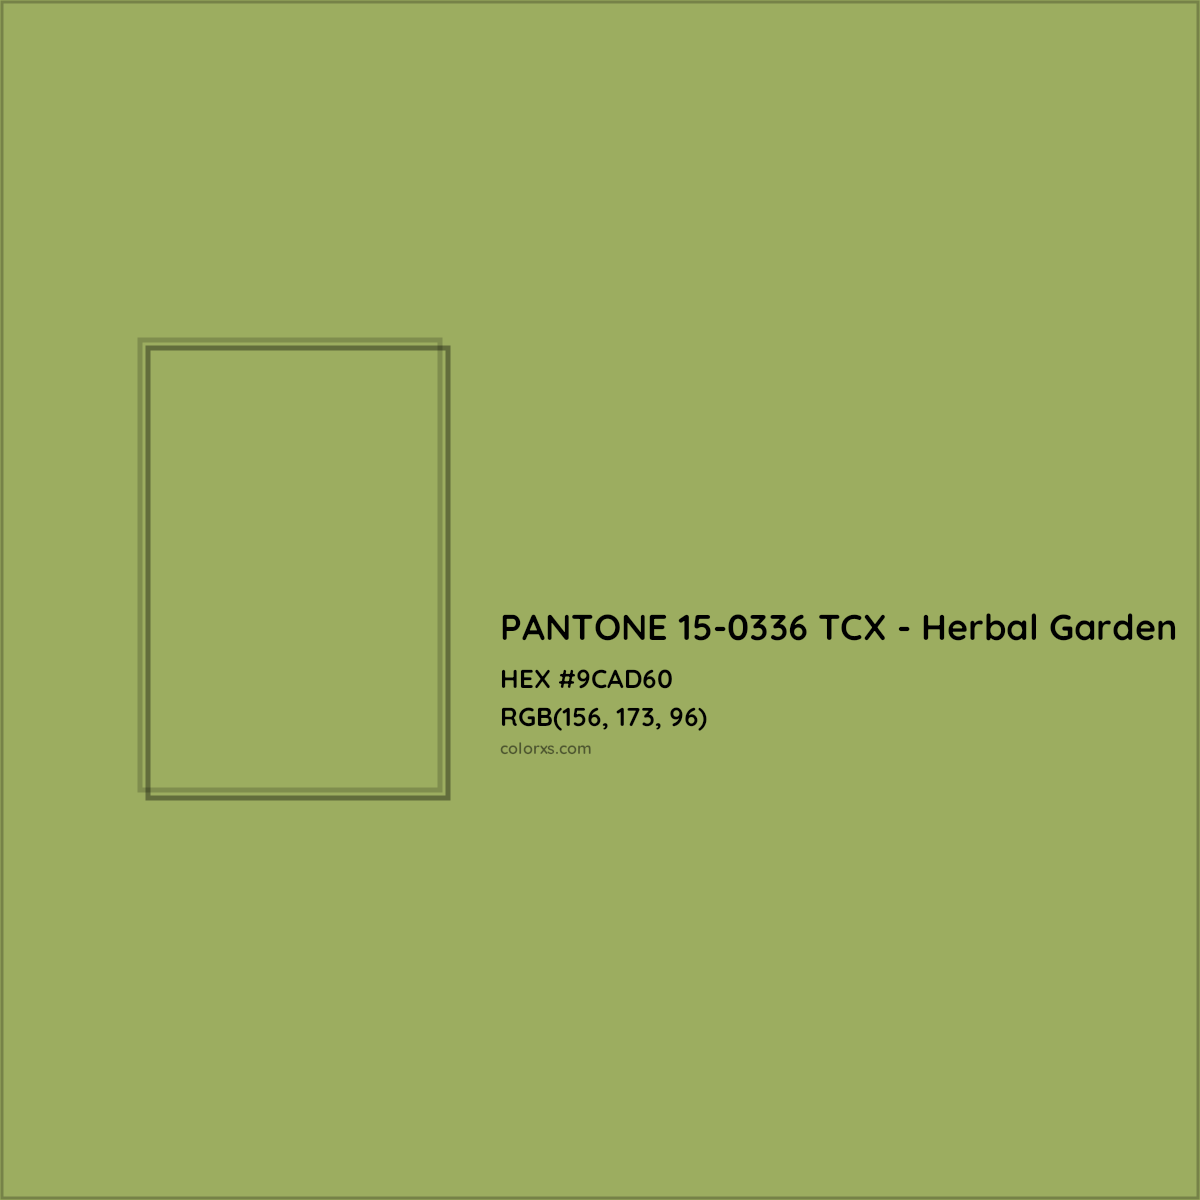 HEX #9CAD60 PANTONE 15-0336 TCX - Herbal Garden CMS Pantone TCX - Color Code